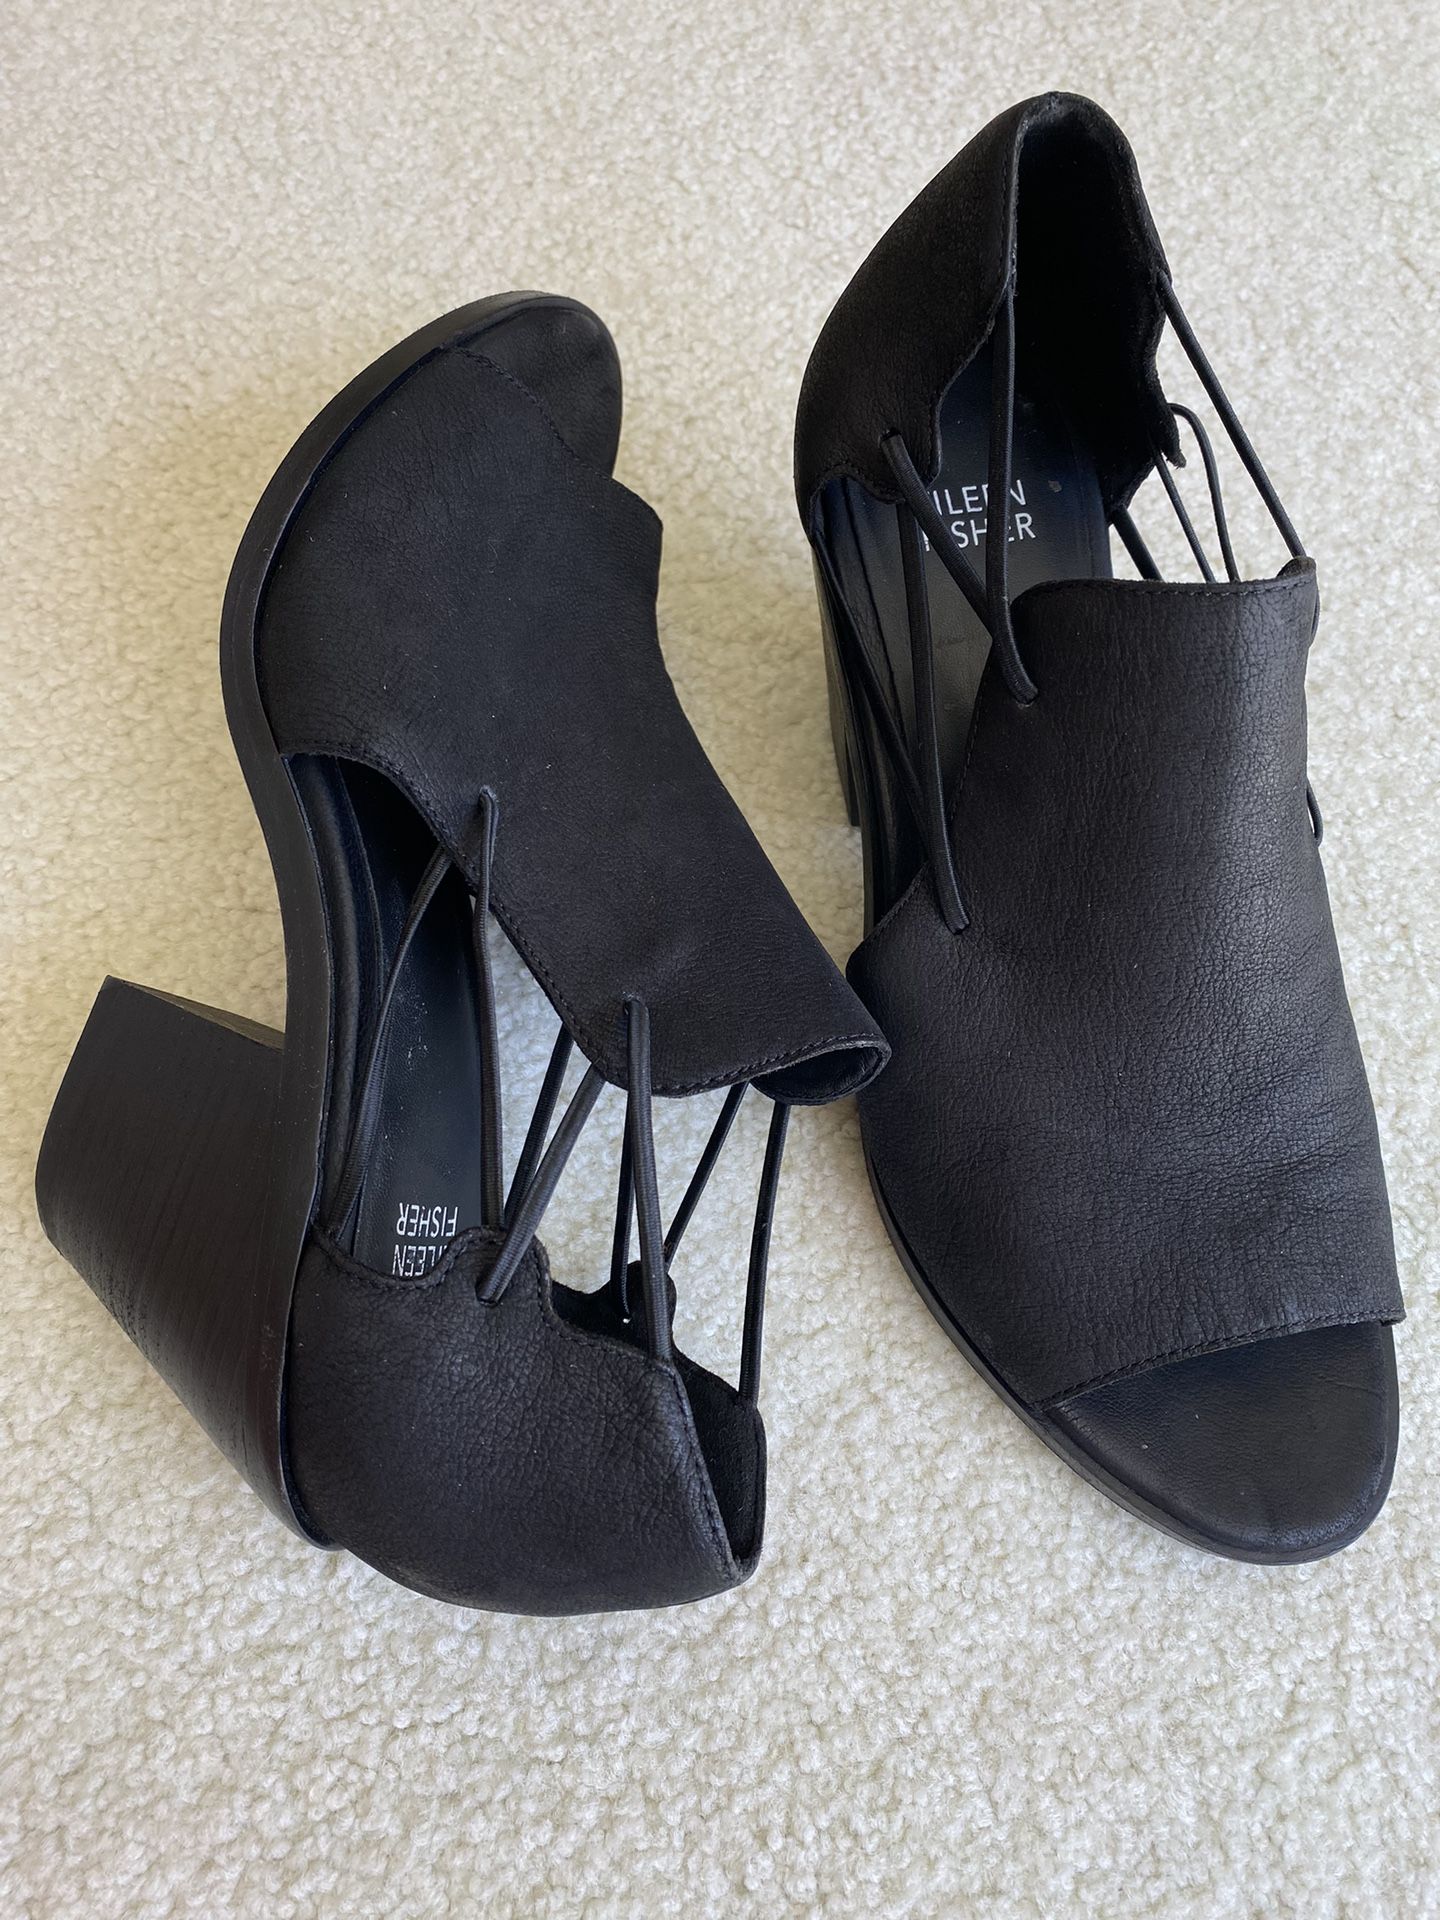 Eileen Fisher Leather block heel shoes Womens 9